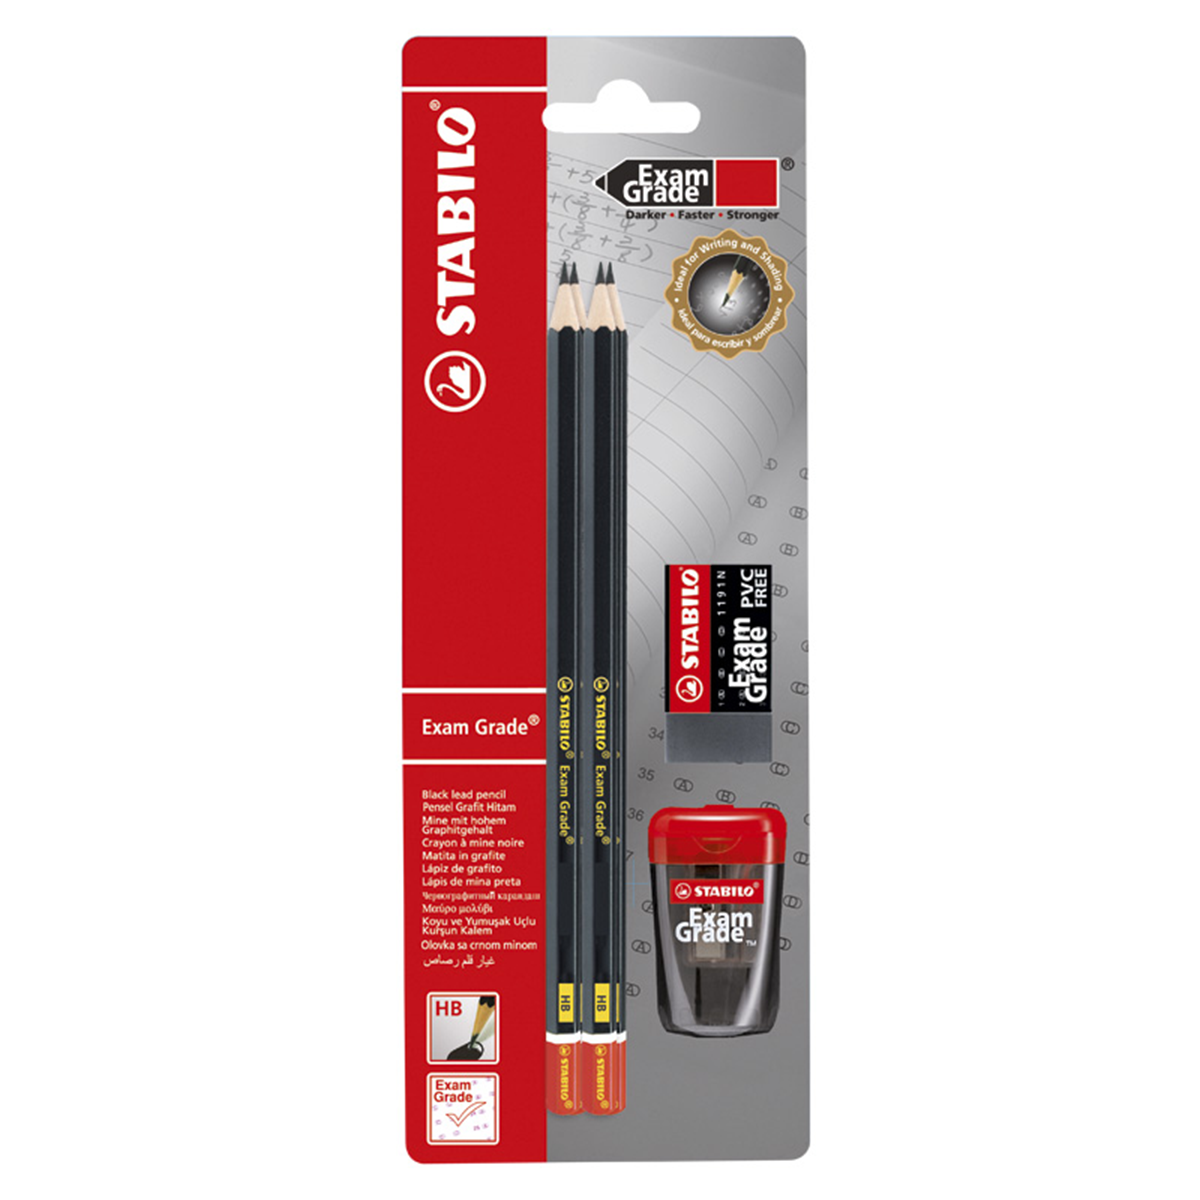 Tombow 2B Pencils Set with Eraser Pencil Case Pencil Sharpener